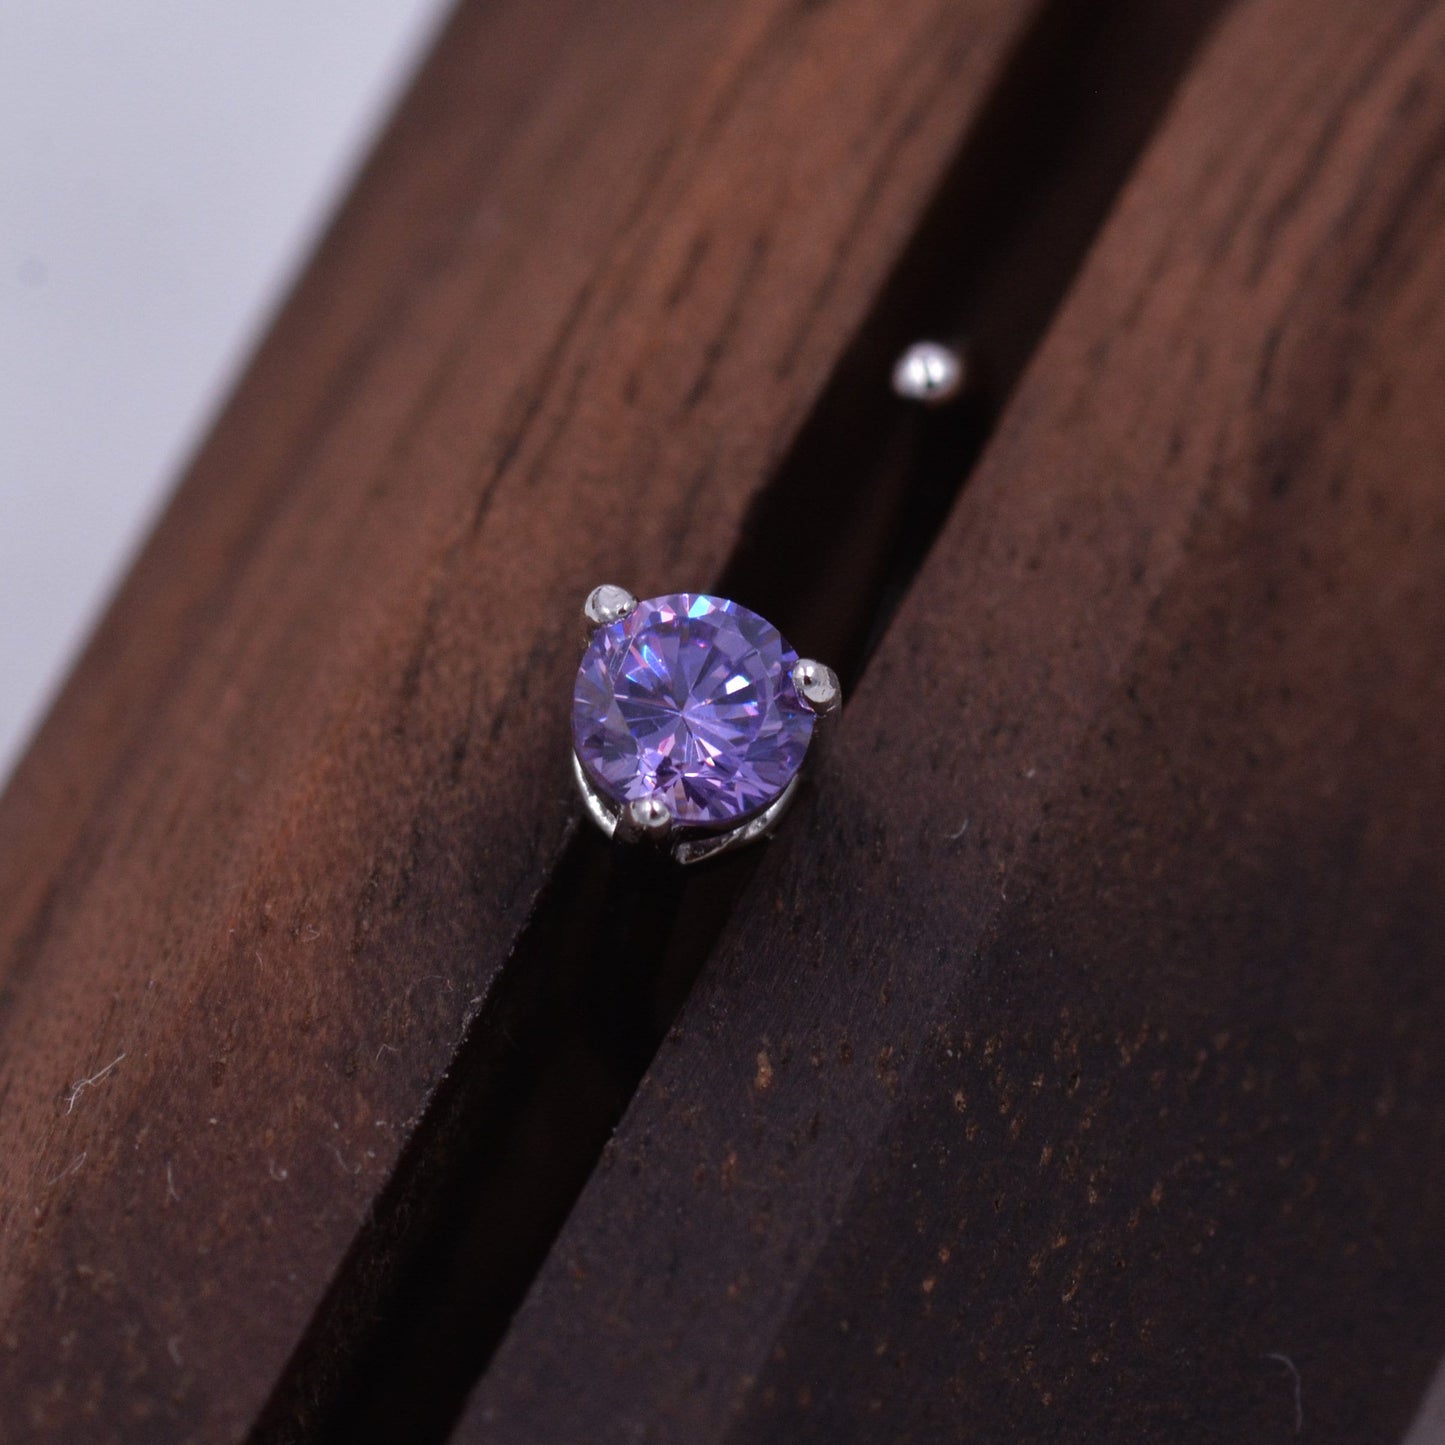 Lilac Amethyst Purple Crystal Huggie Hoop Threader Earrings in Sterling Silver, 3mm Three Prong, Gold or Silver, Pull Through Open Hoops